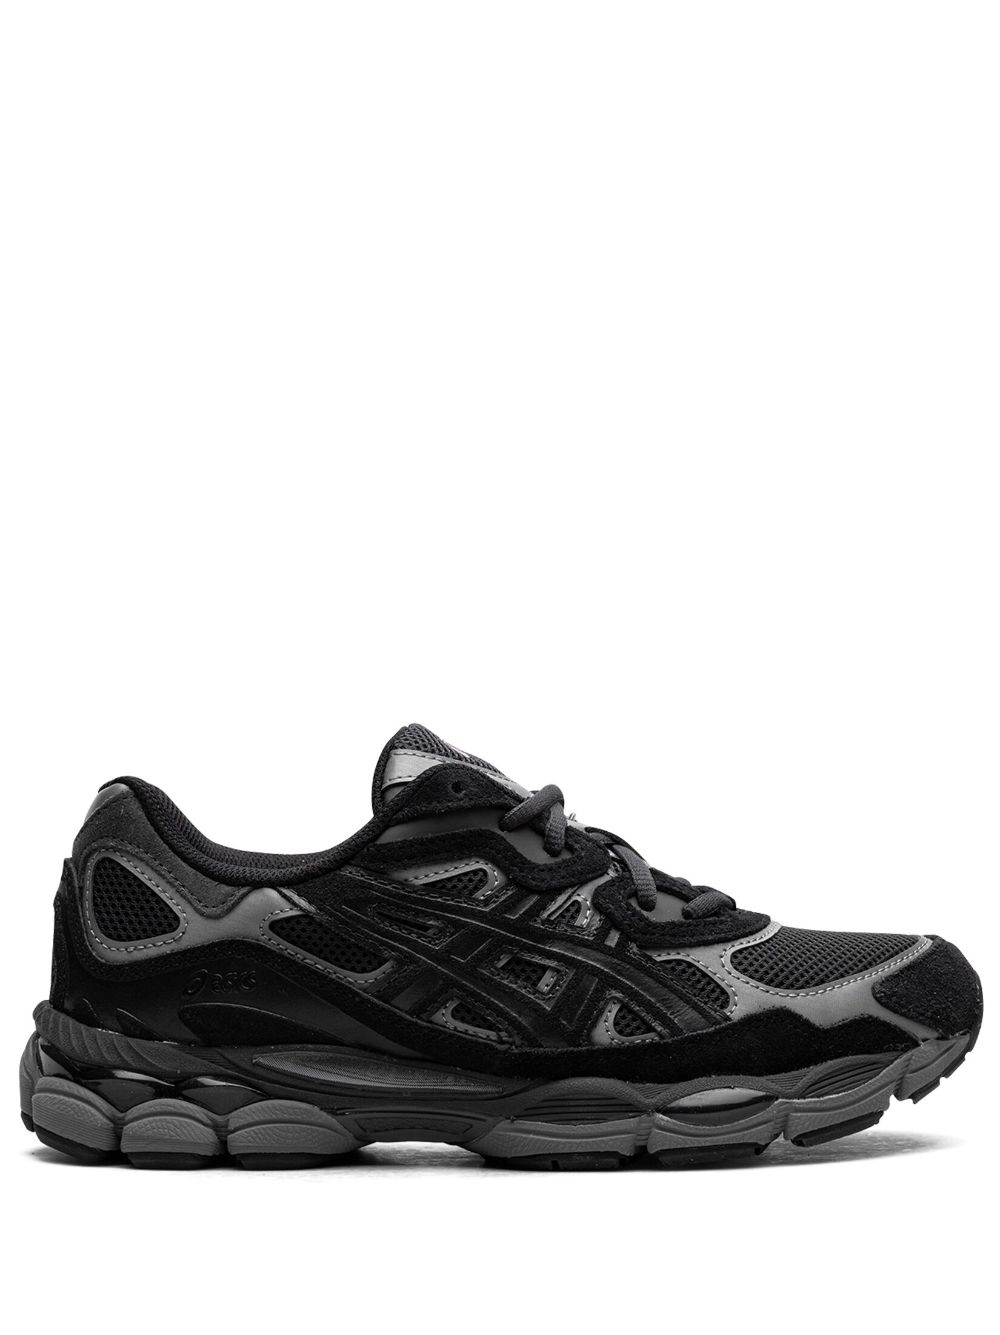 Asics Black Gel-nyc Sneakers In 020 Graphite Grey/bl